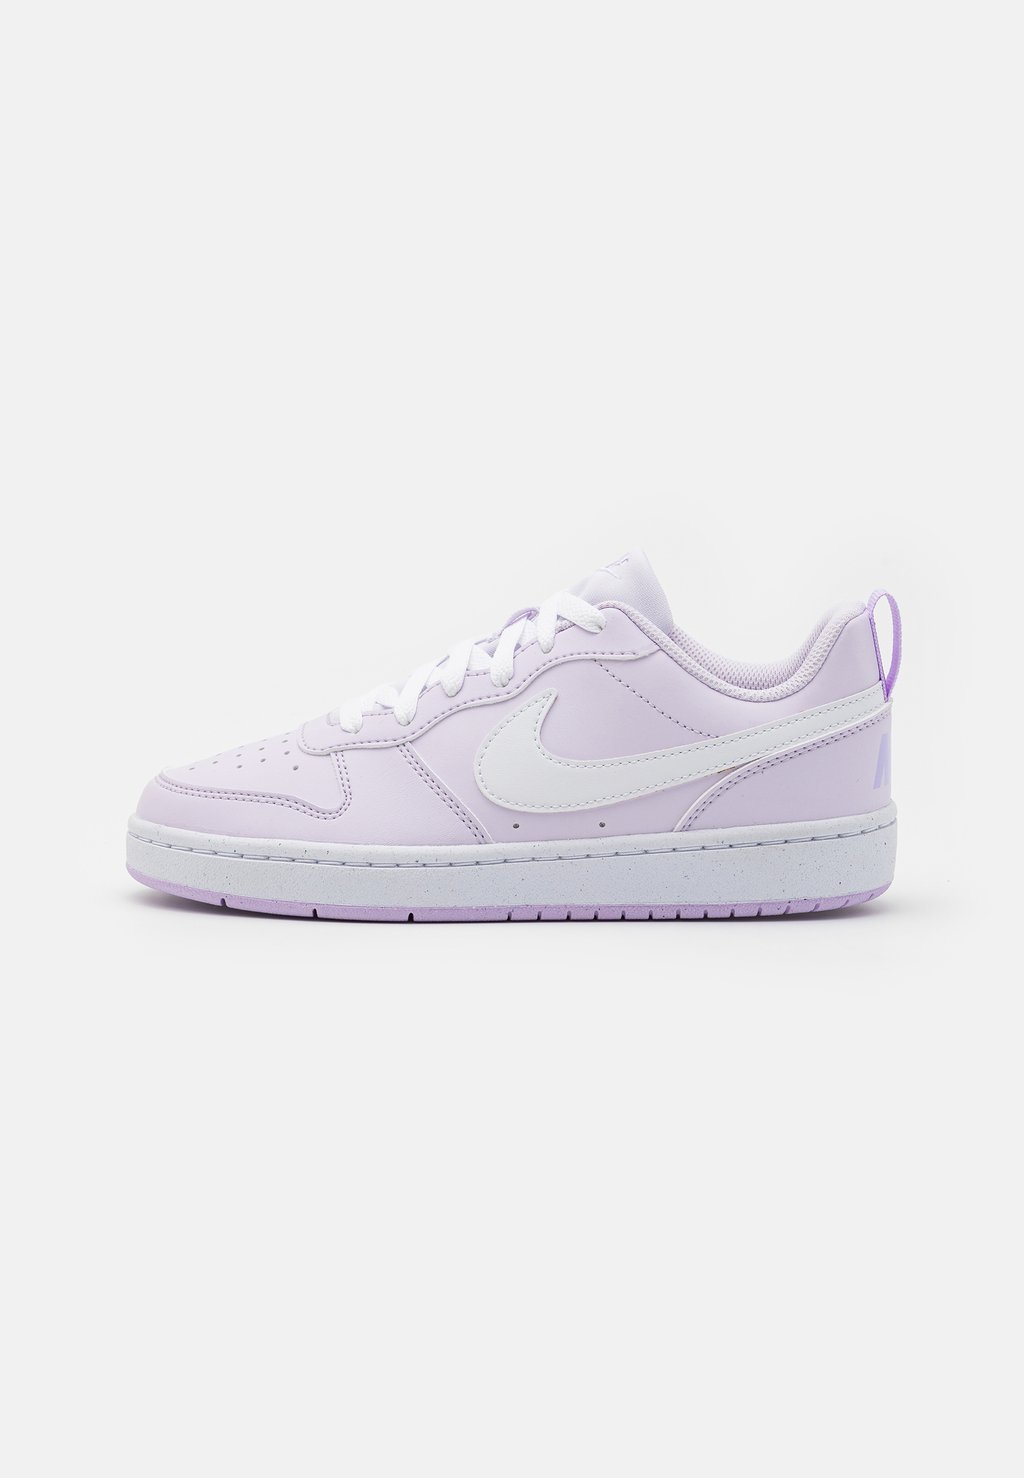 Низкие кроссовки Court Borough Reccraft Unisex Nike, цвет barely grape/white/lilac bloom konplott кольцо where the lilac bloom